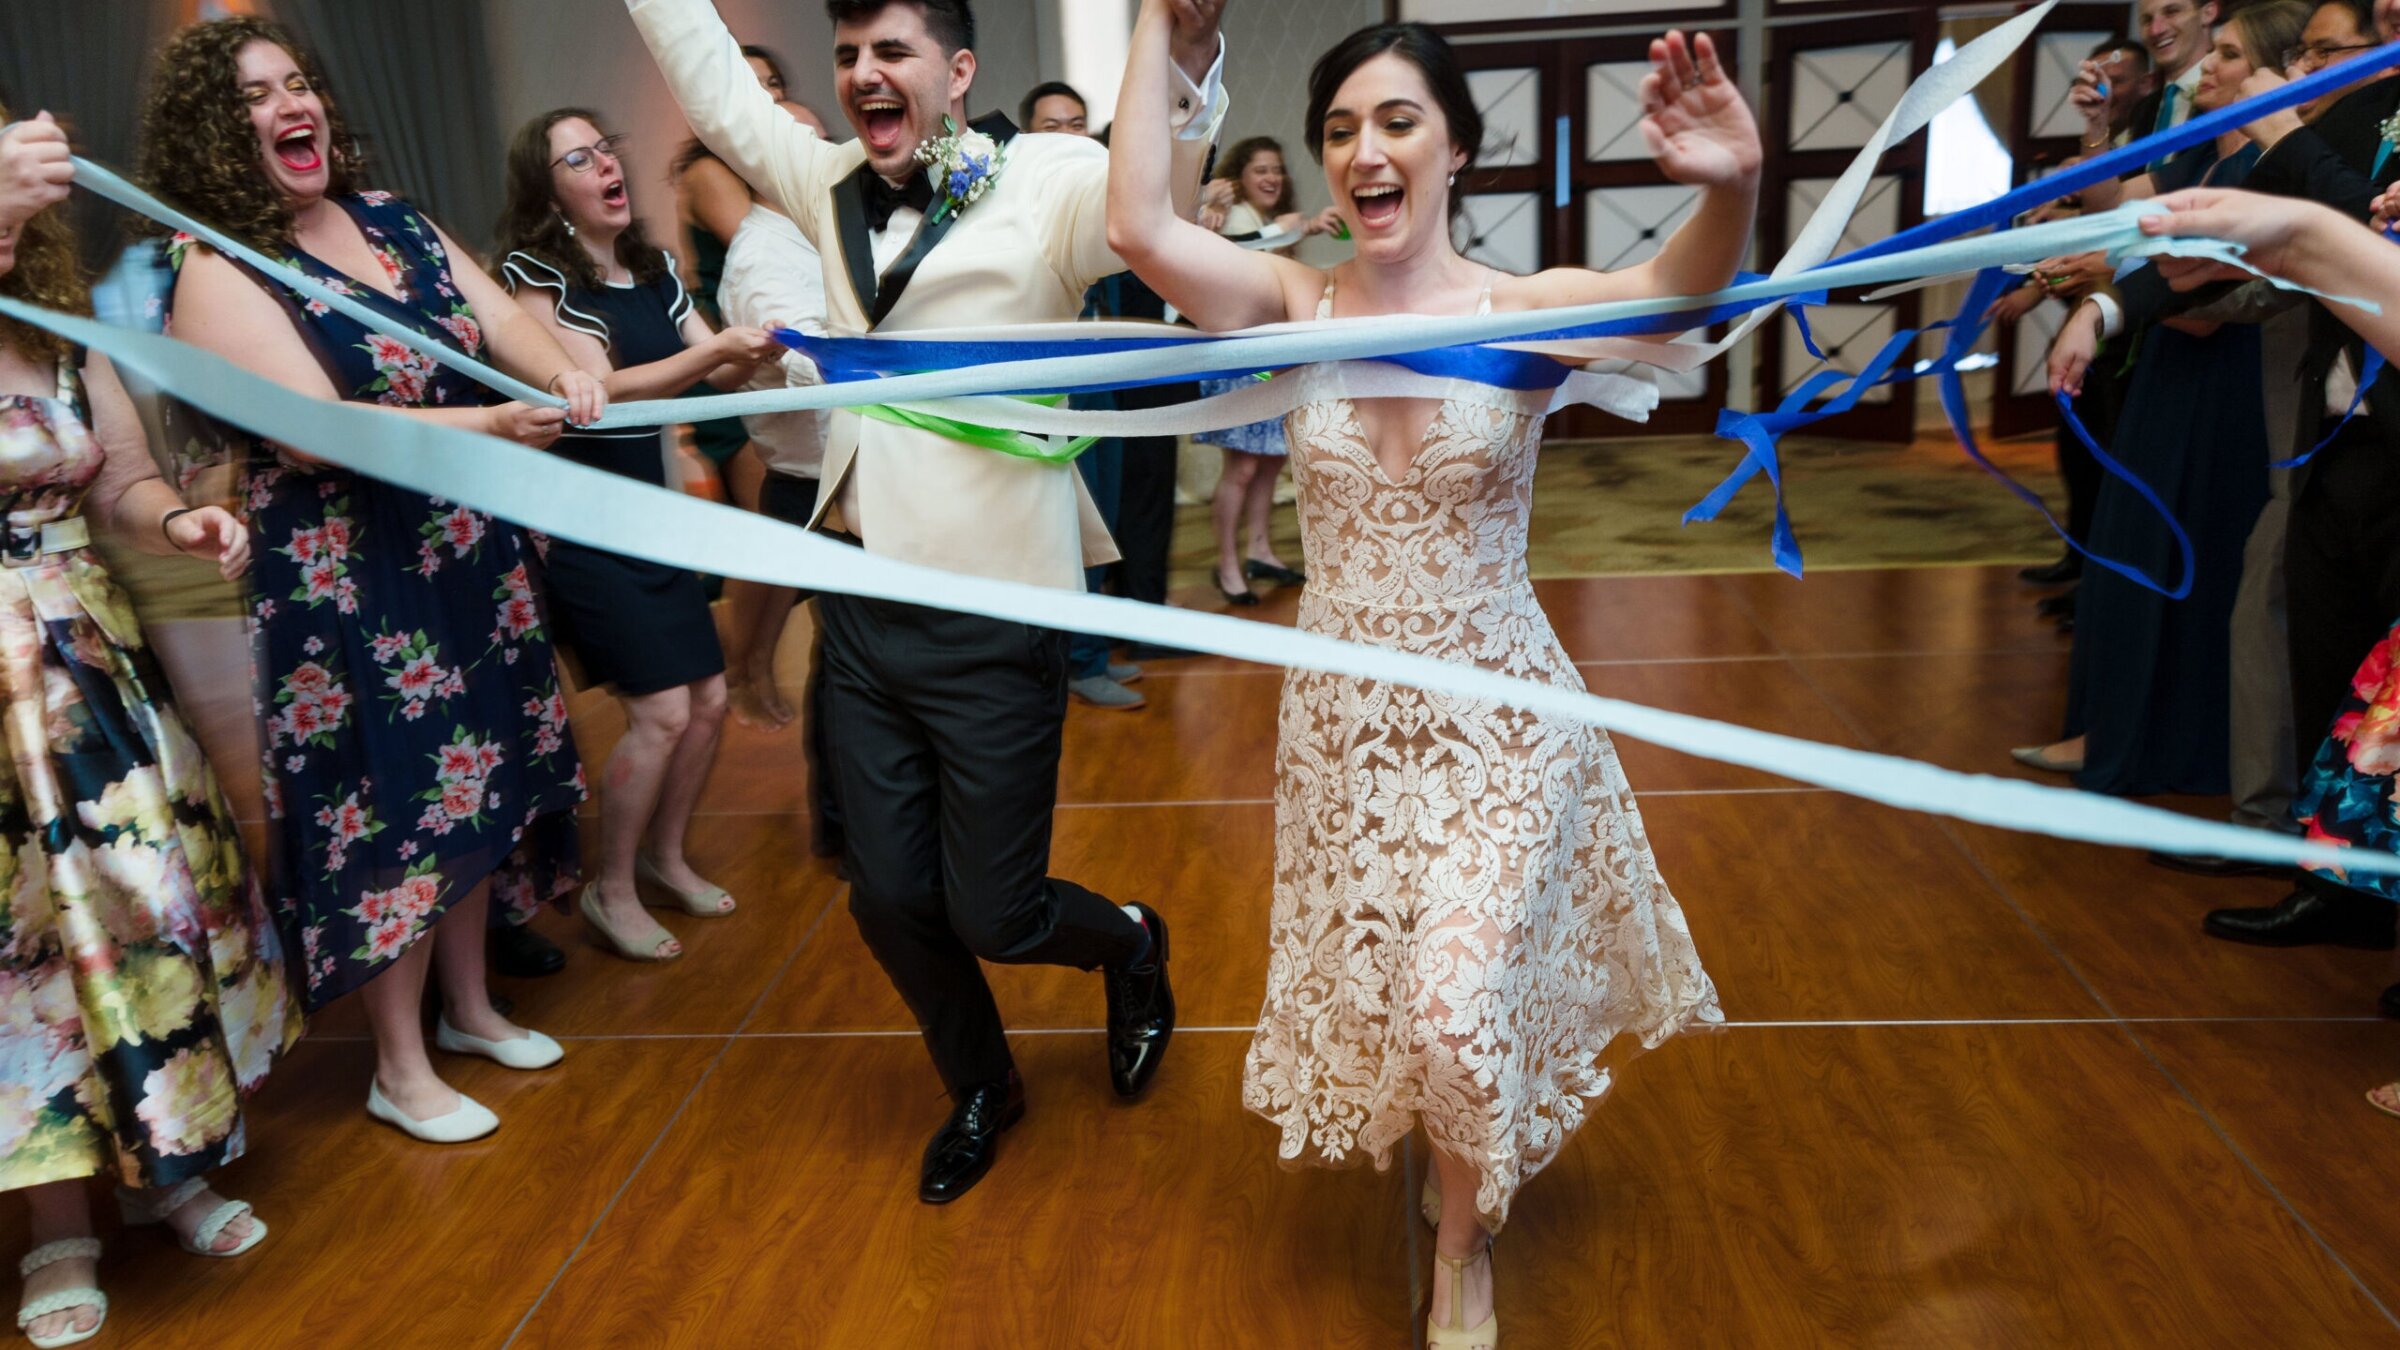 Alex Zeldin, left, and Tamar Caplan dance into the reception at their wedding, Aug. 21, 2022. (JC Lemon Photography)